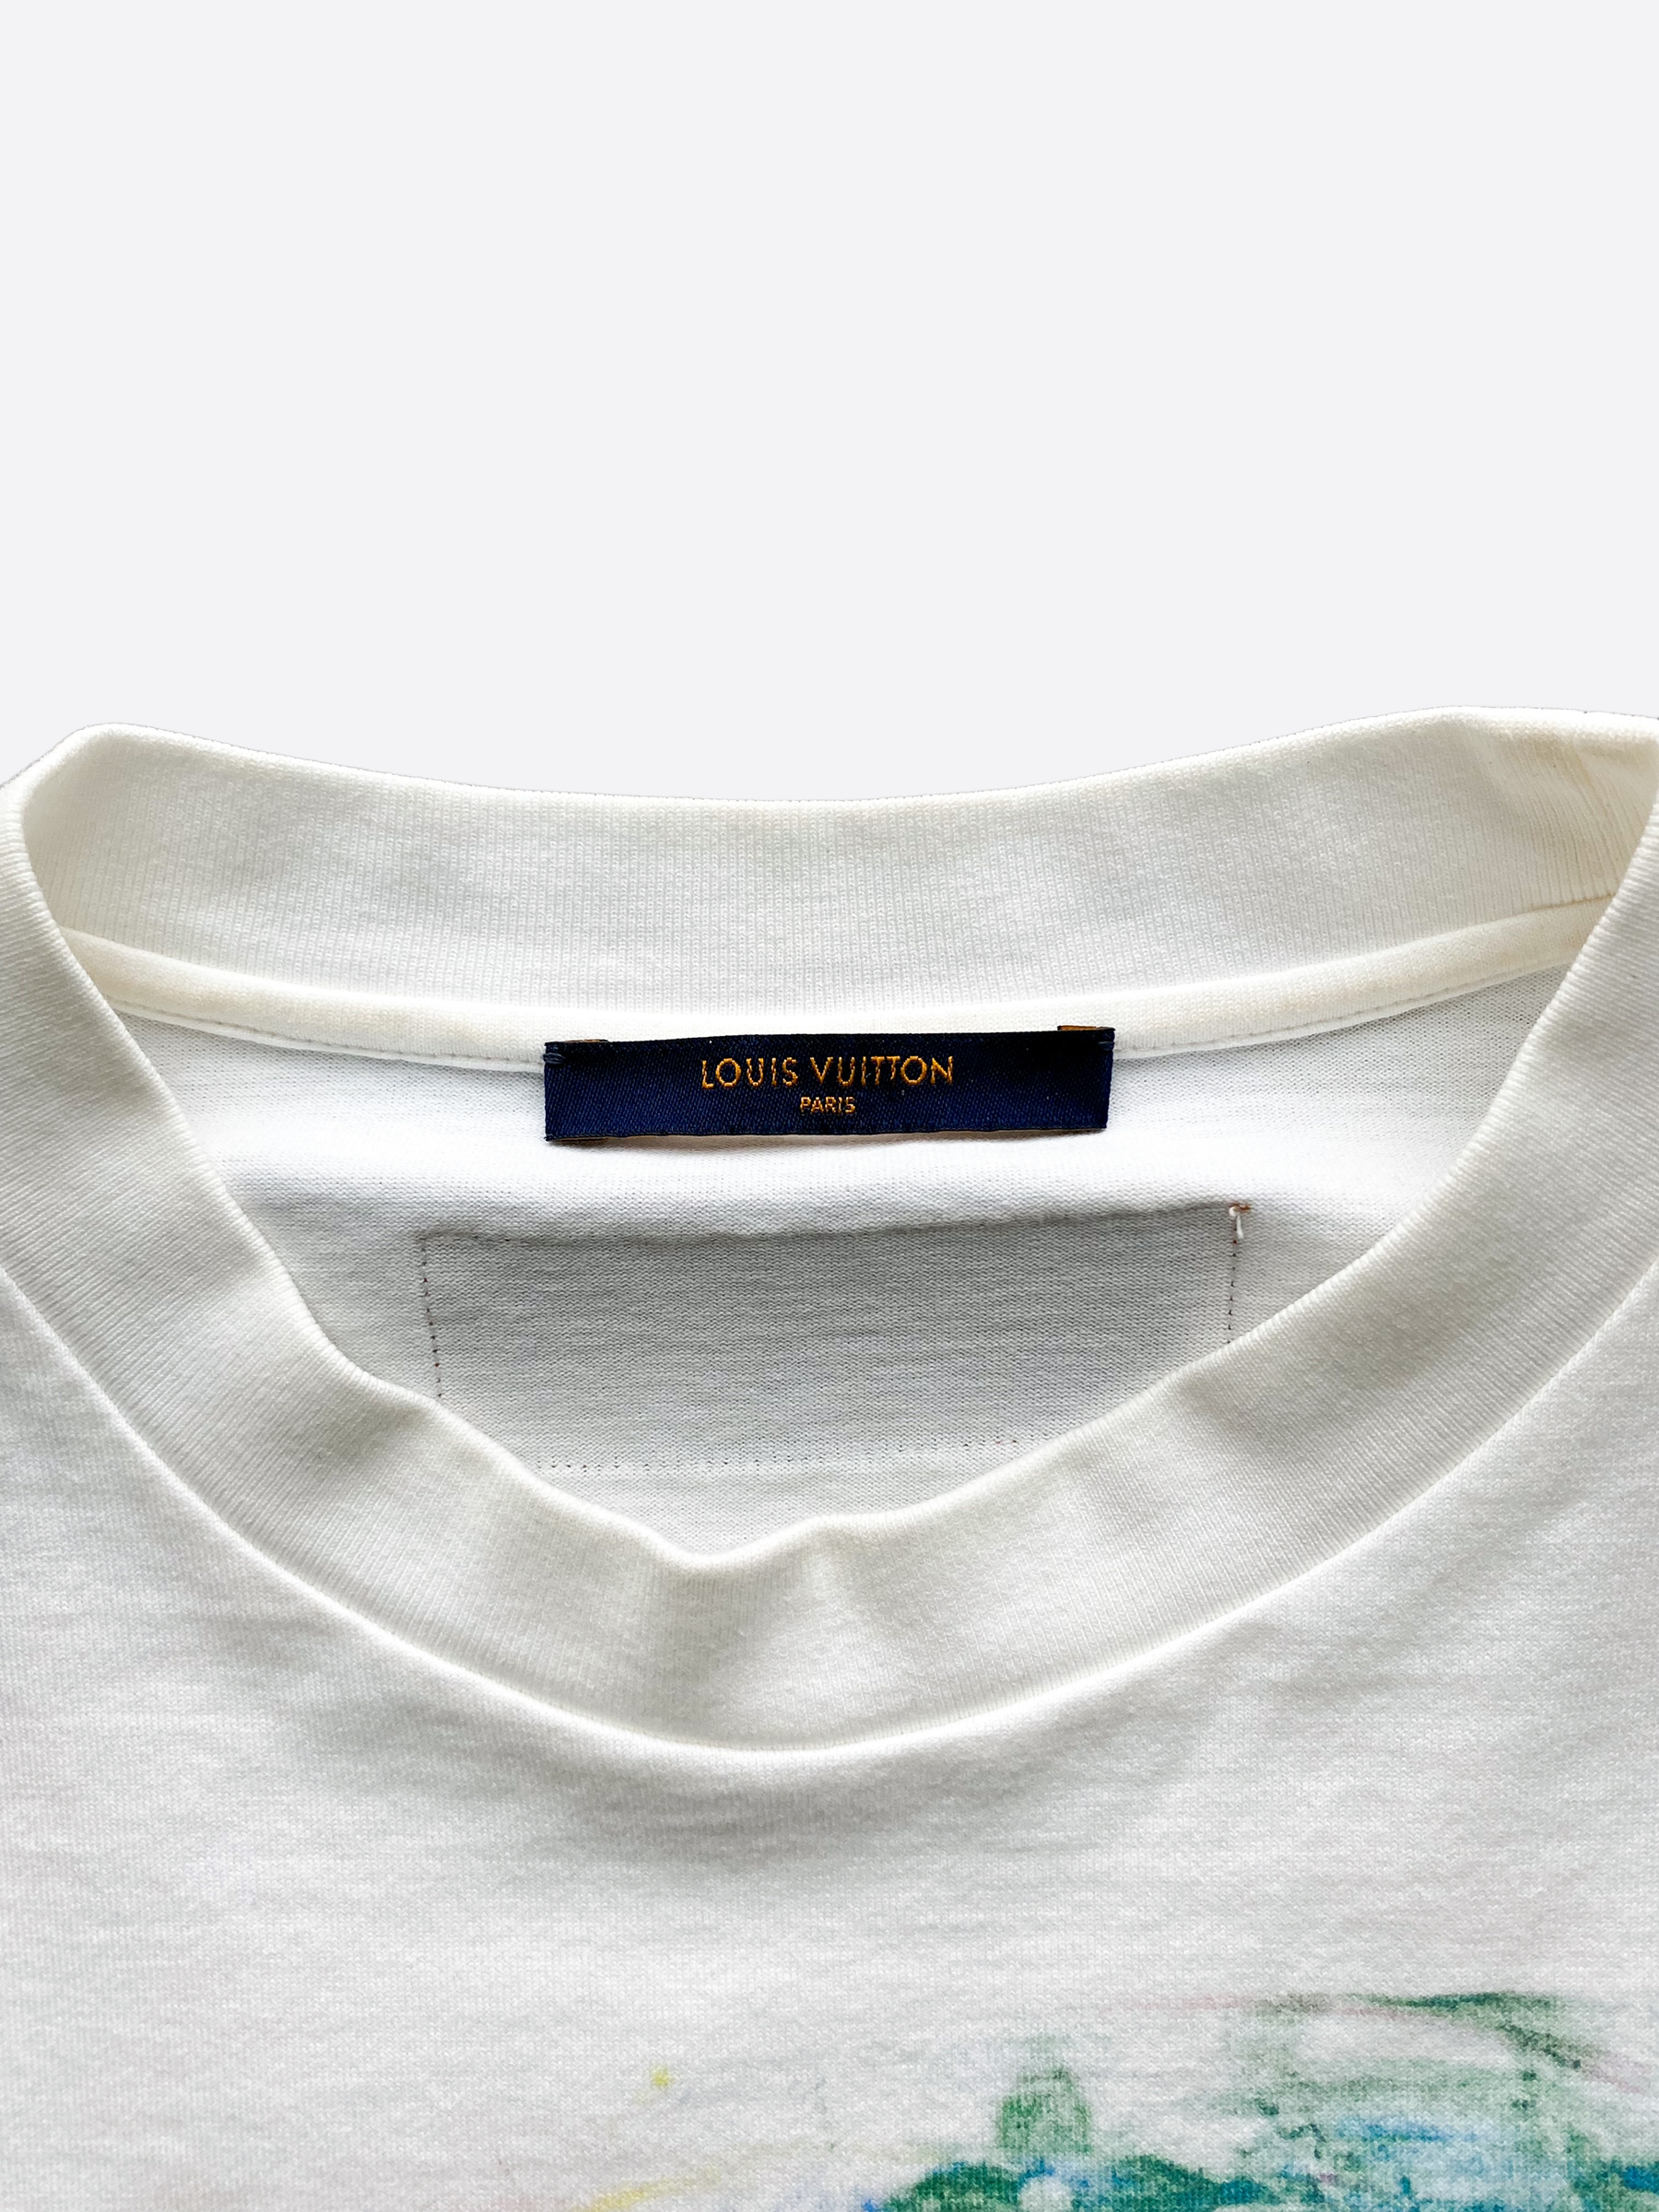 LOUIS VUITTON PASTEL Monogram Front Printed T-shirt size M $535.00